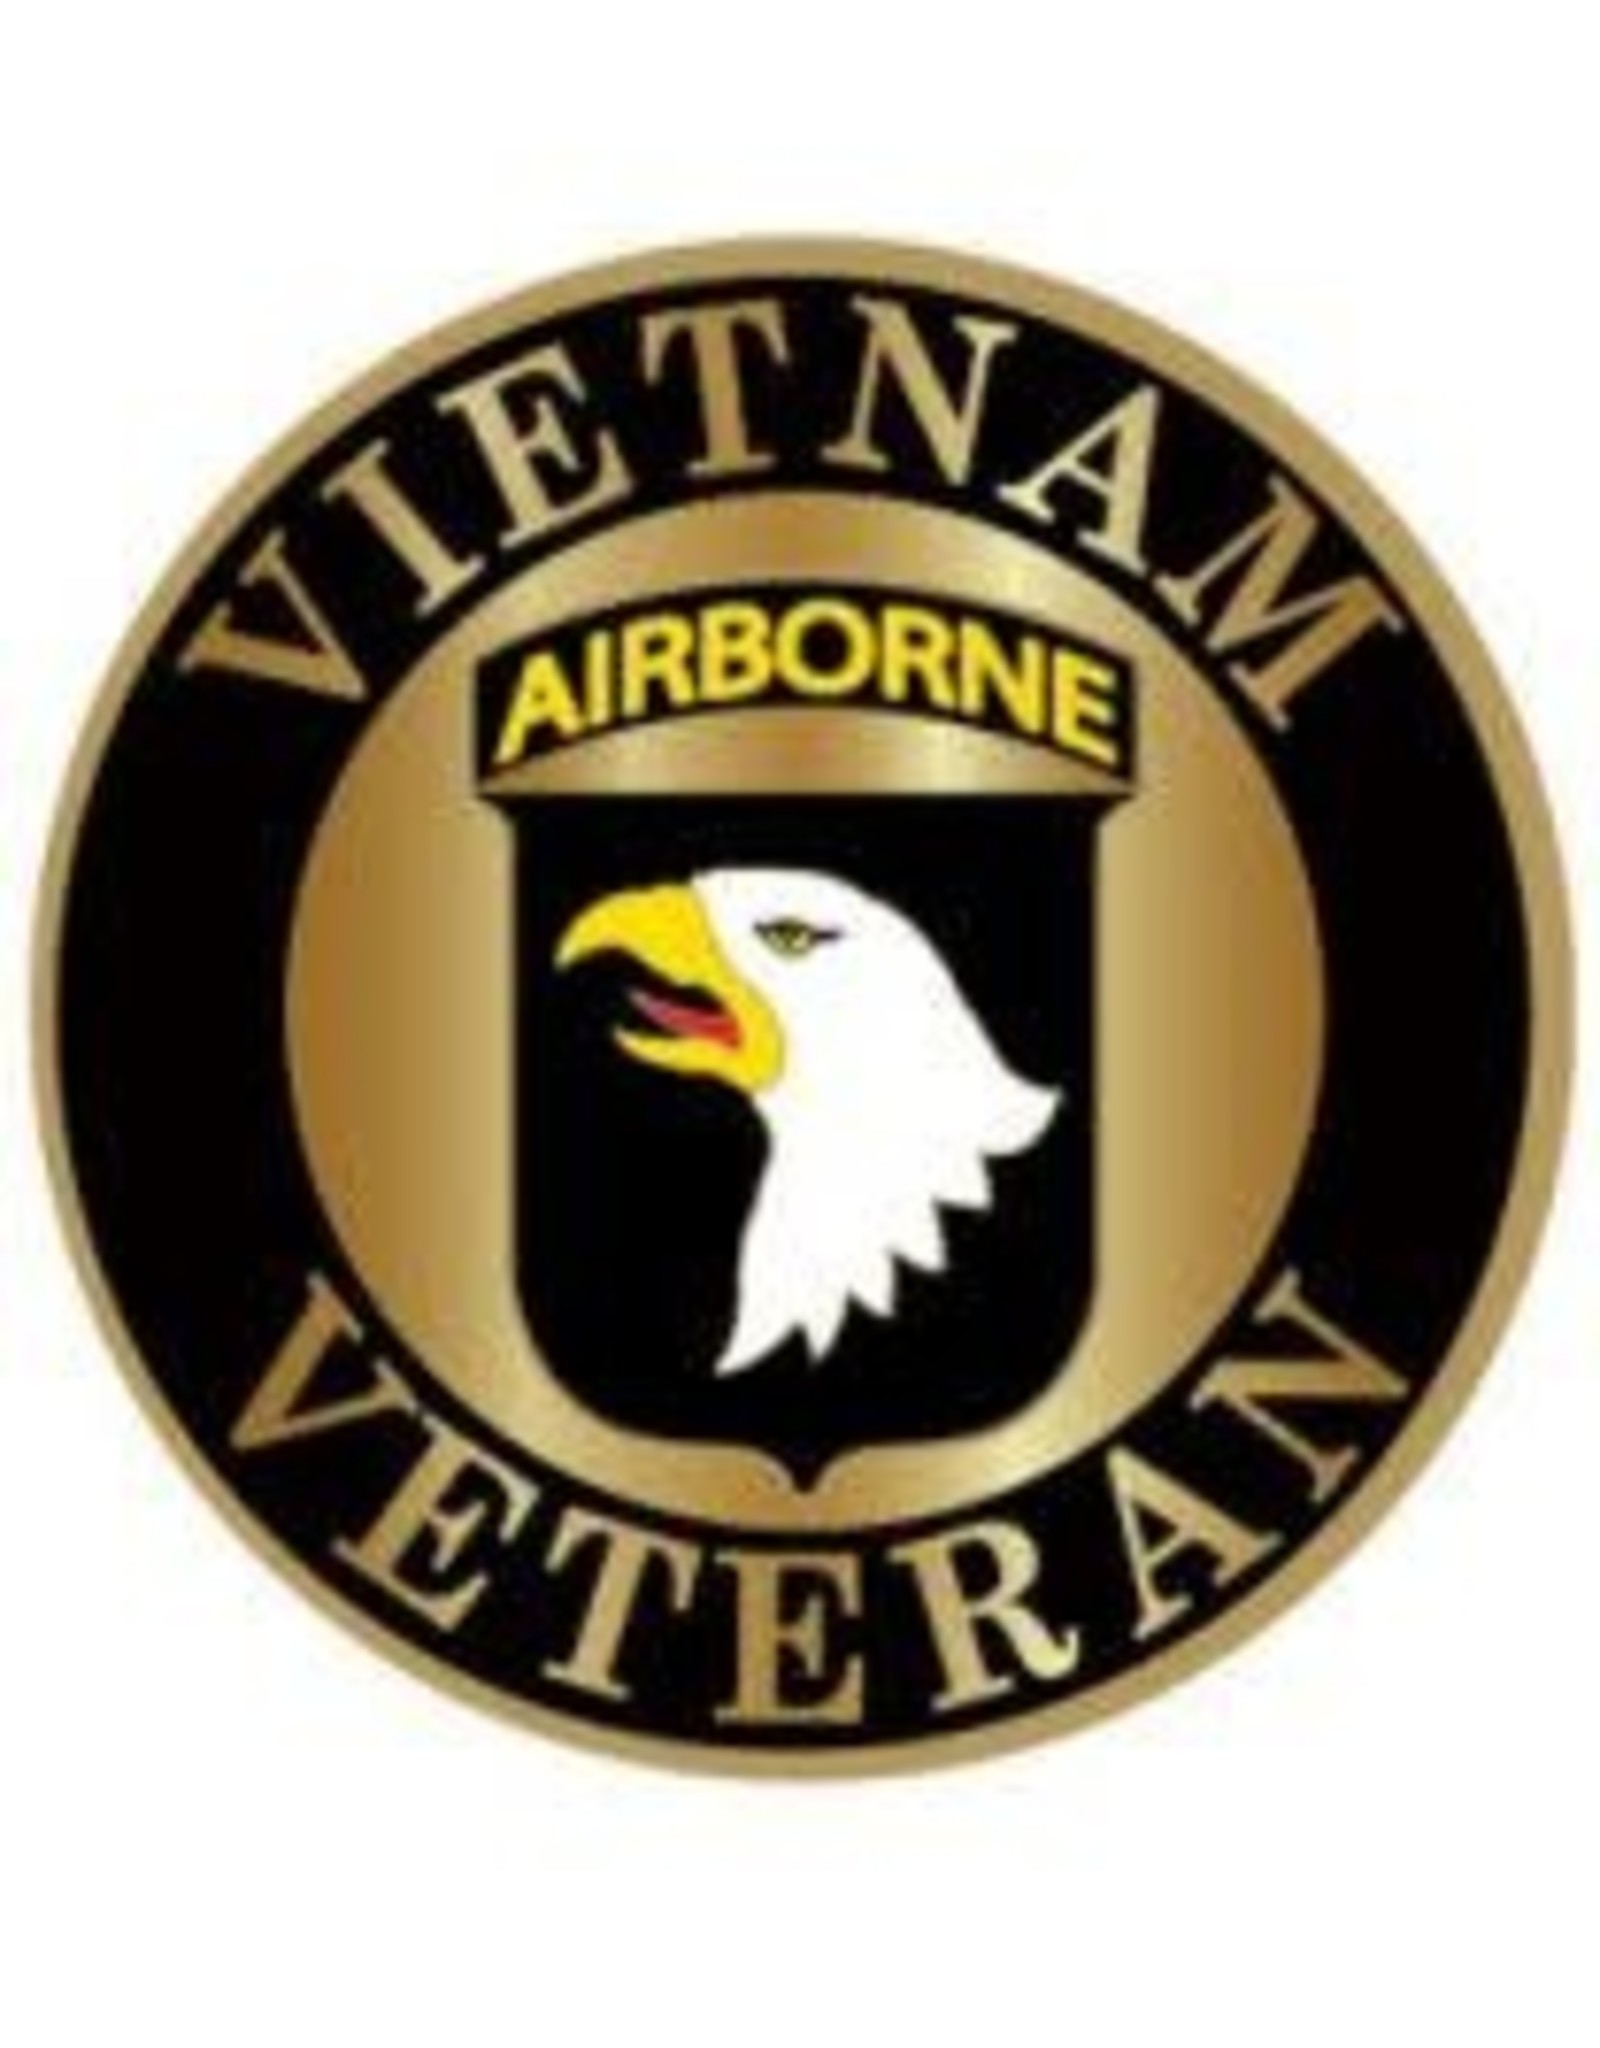 Pin - Vietnam 101st Airborne Division